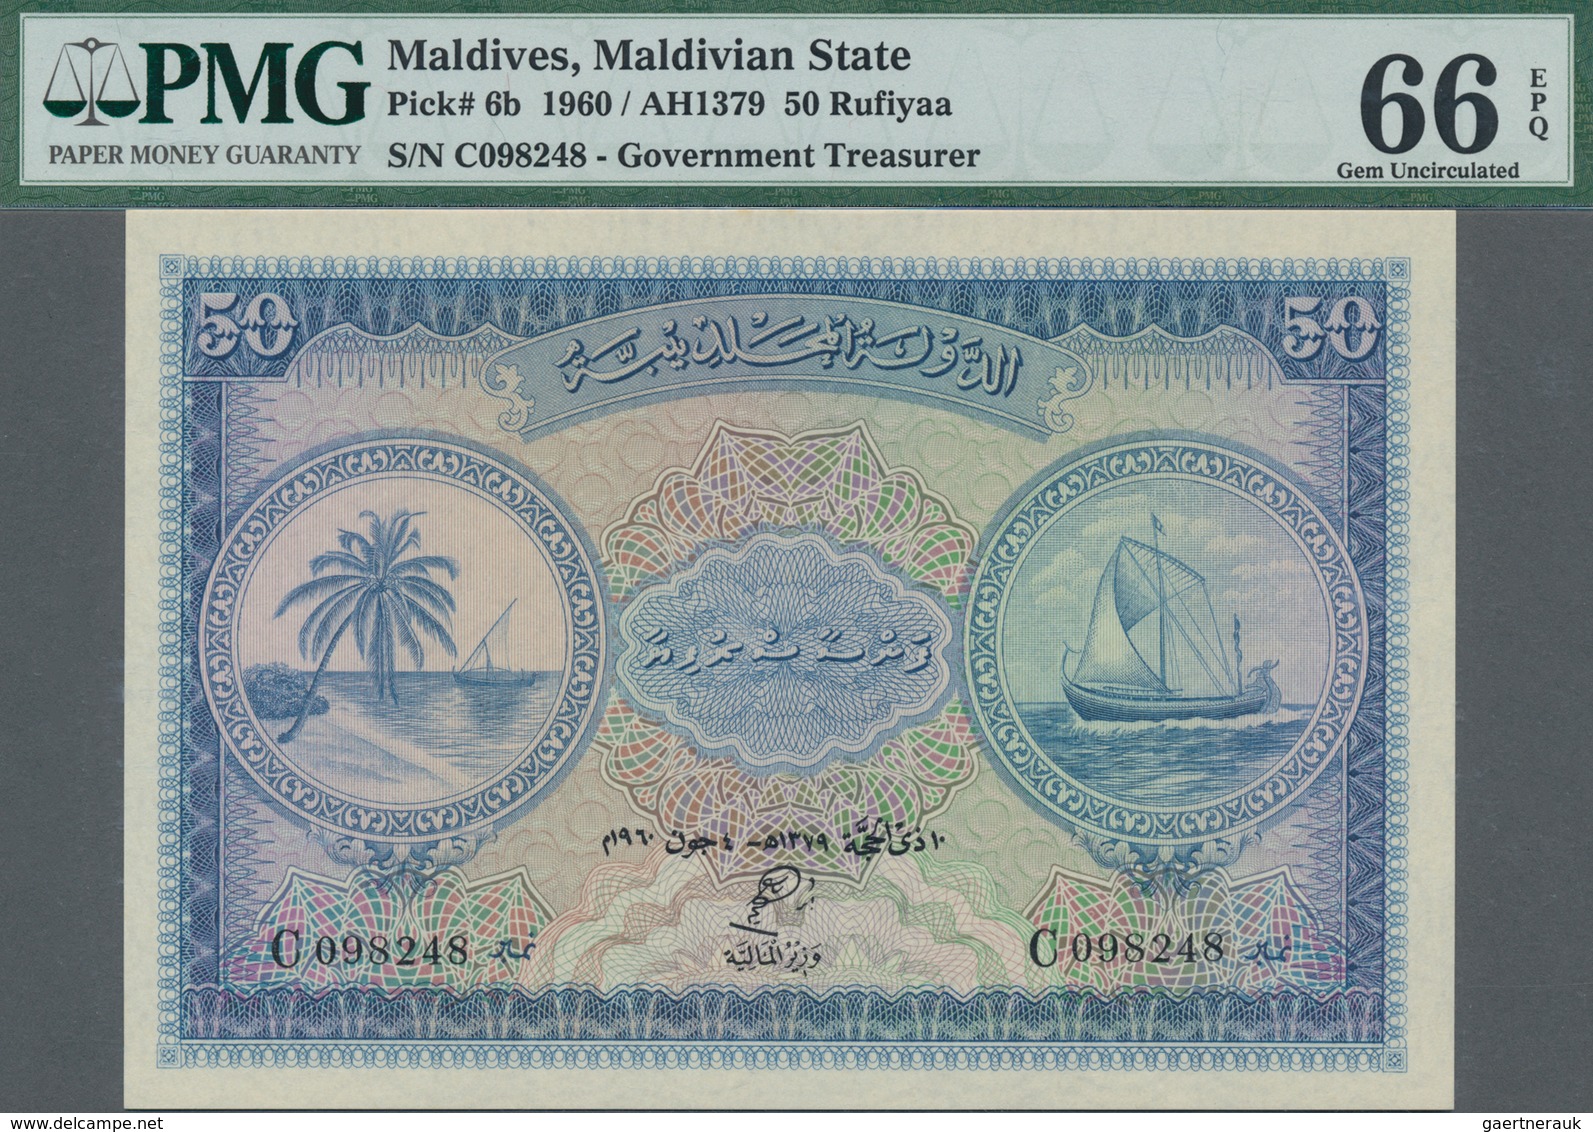 Maldives / Malediven: Maldivian State 50 Rufiyaa 1960, P.6b, Perfect Condition, PMG 66 Gem Uncircula - Maldives